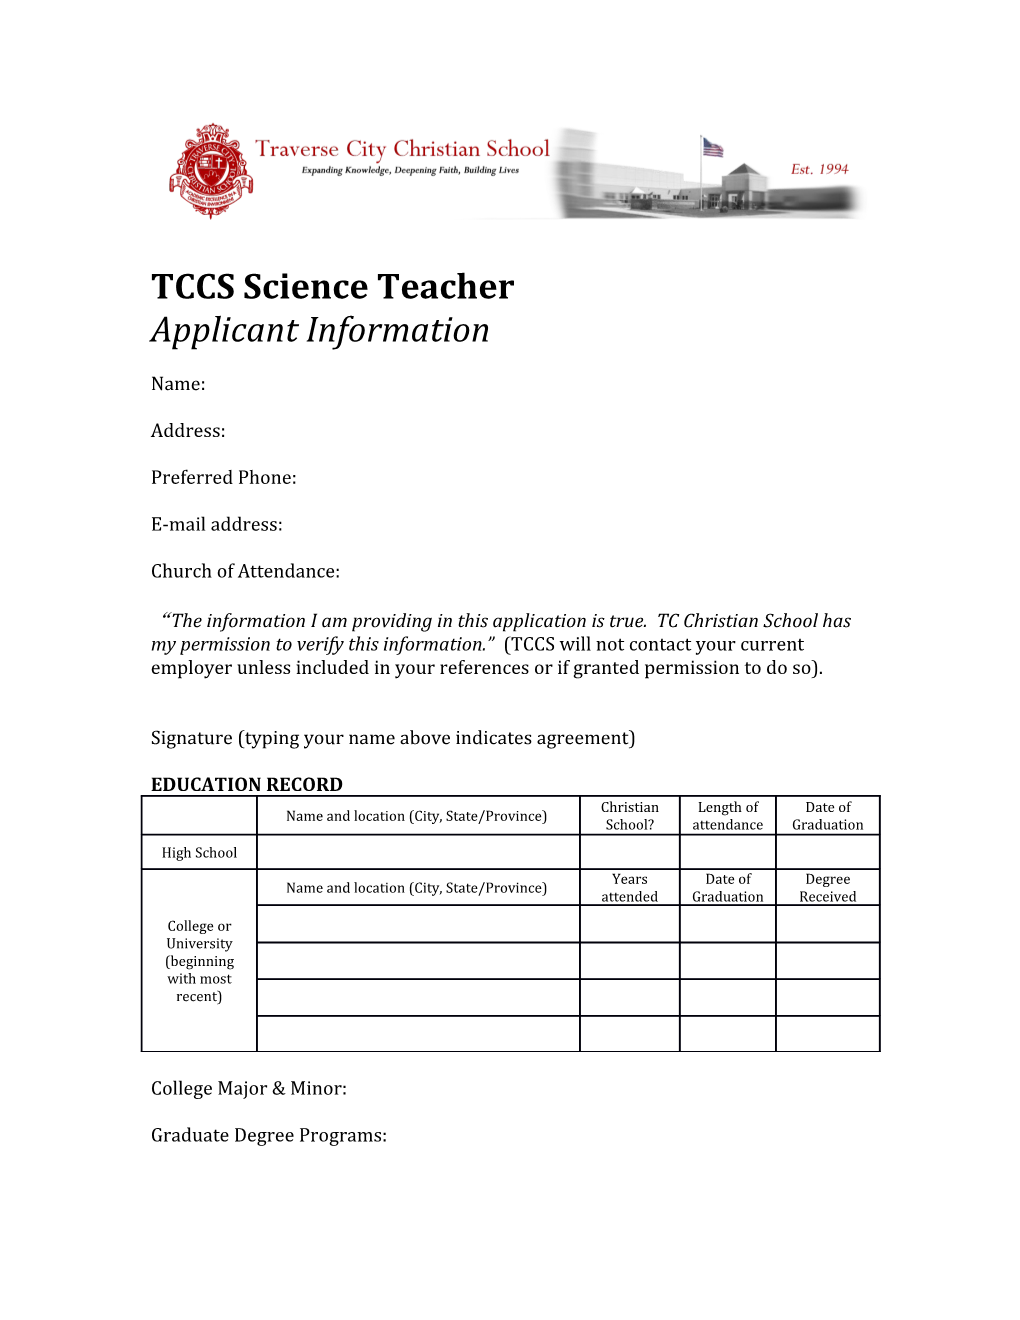 TCCS Science Teacher